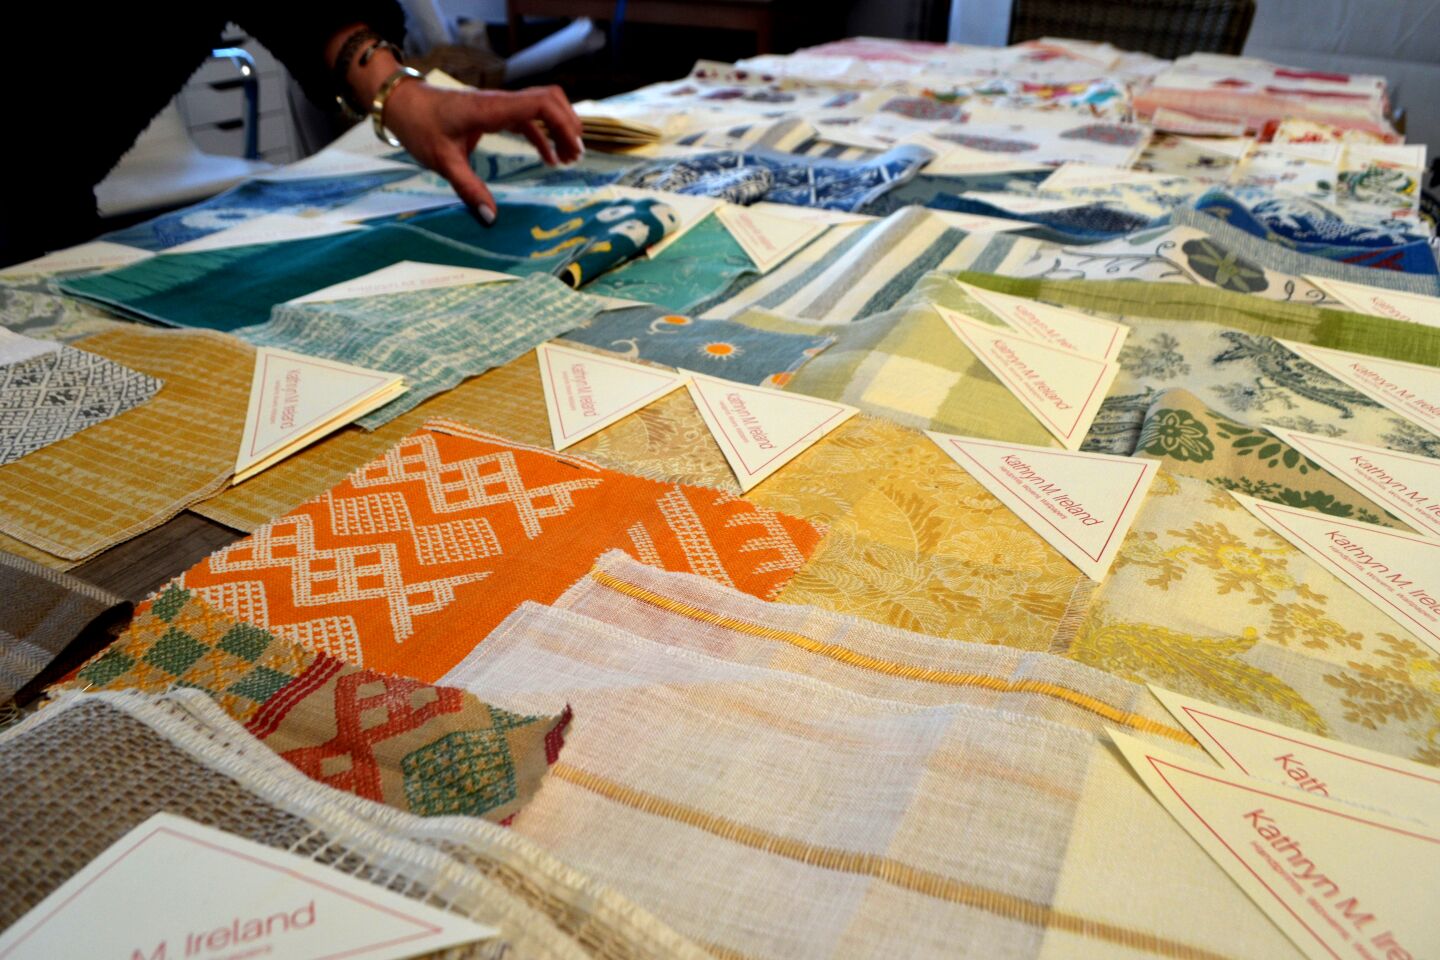 Kathryn Ireland textile samples at her Santa Monica studio.